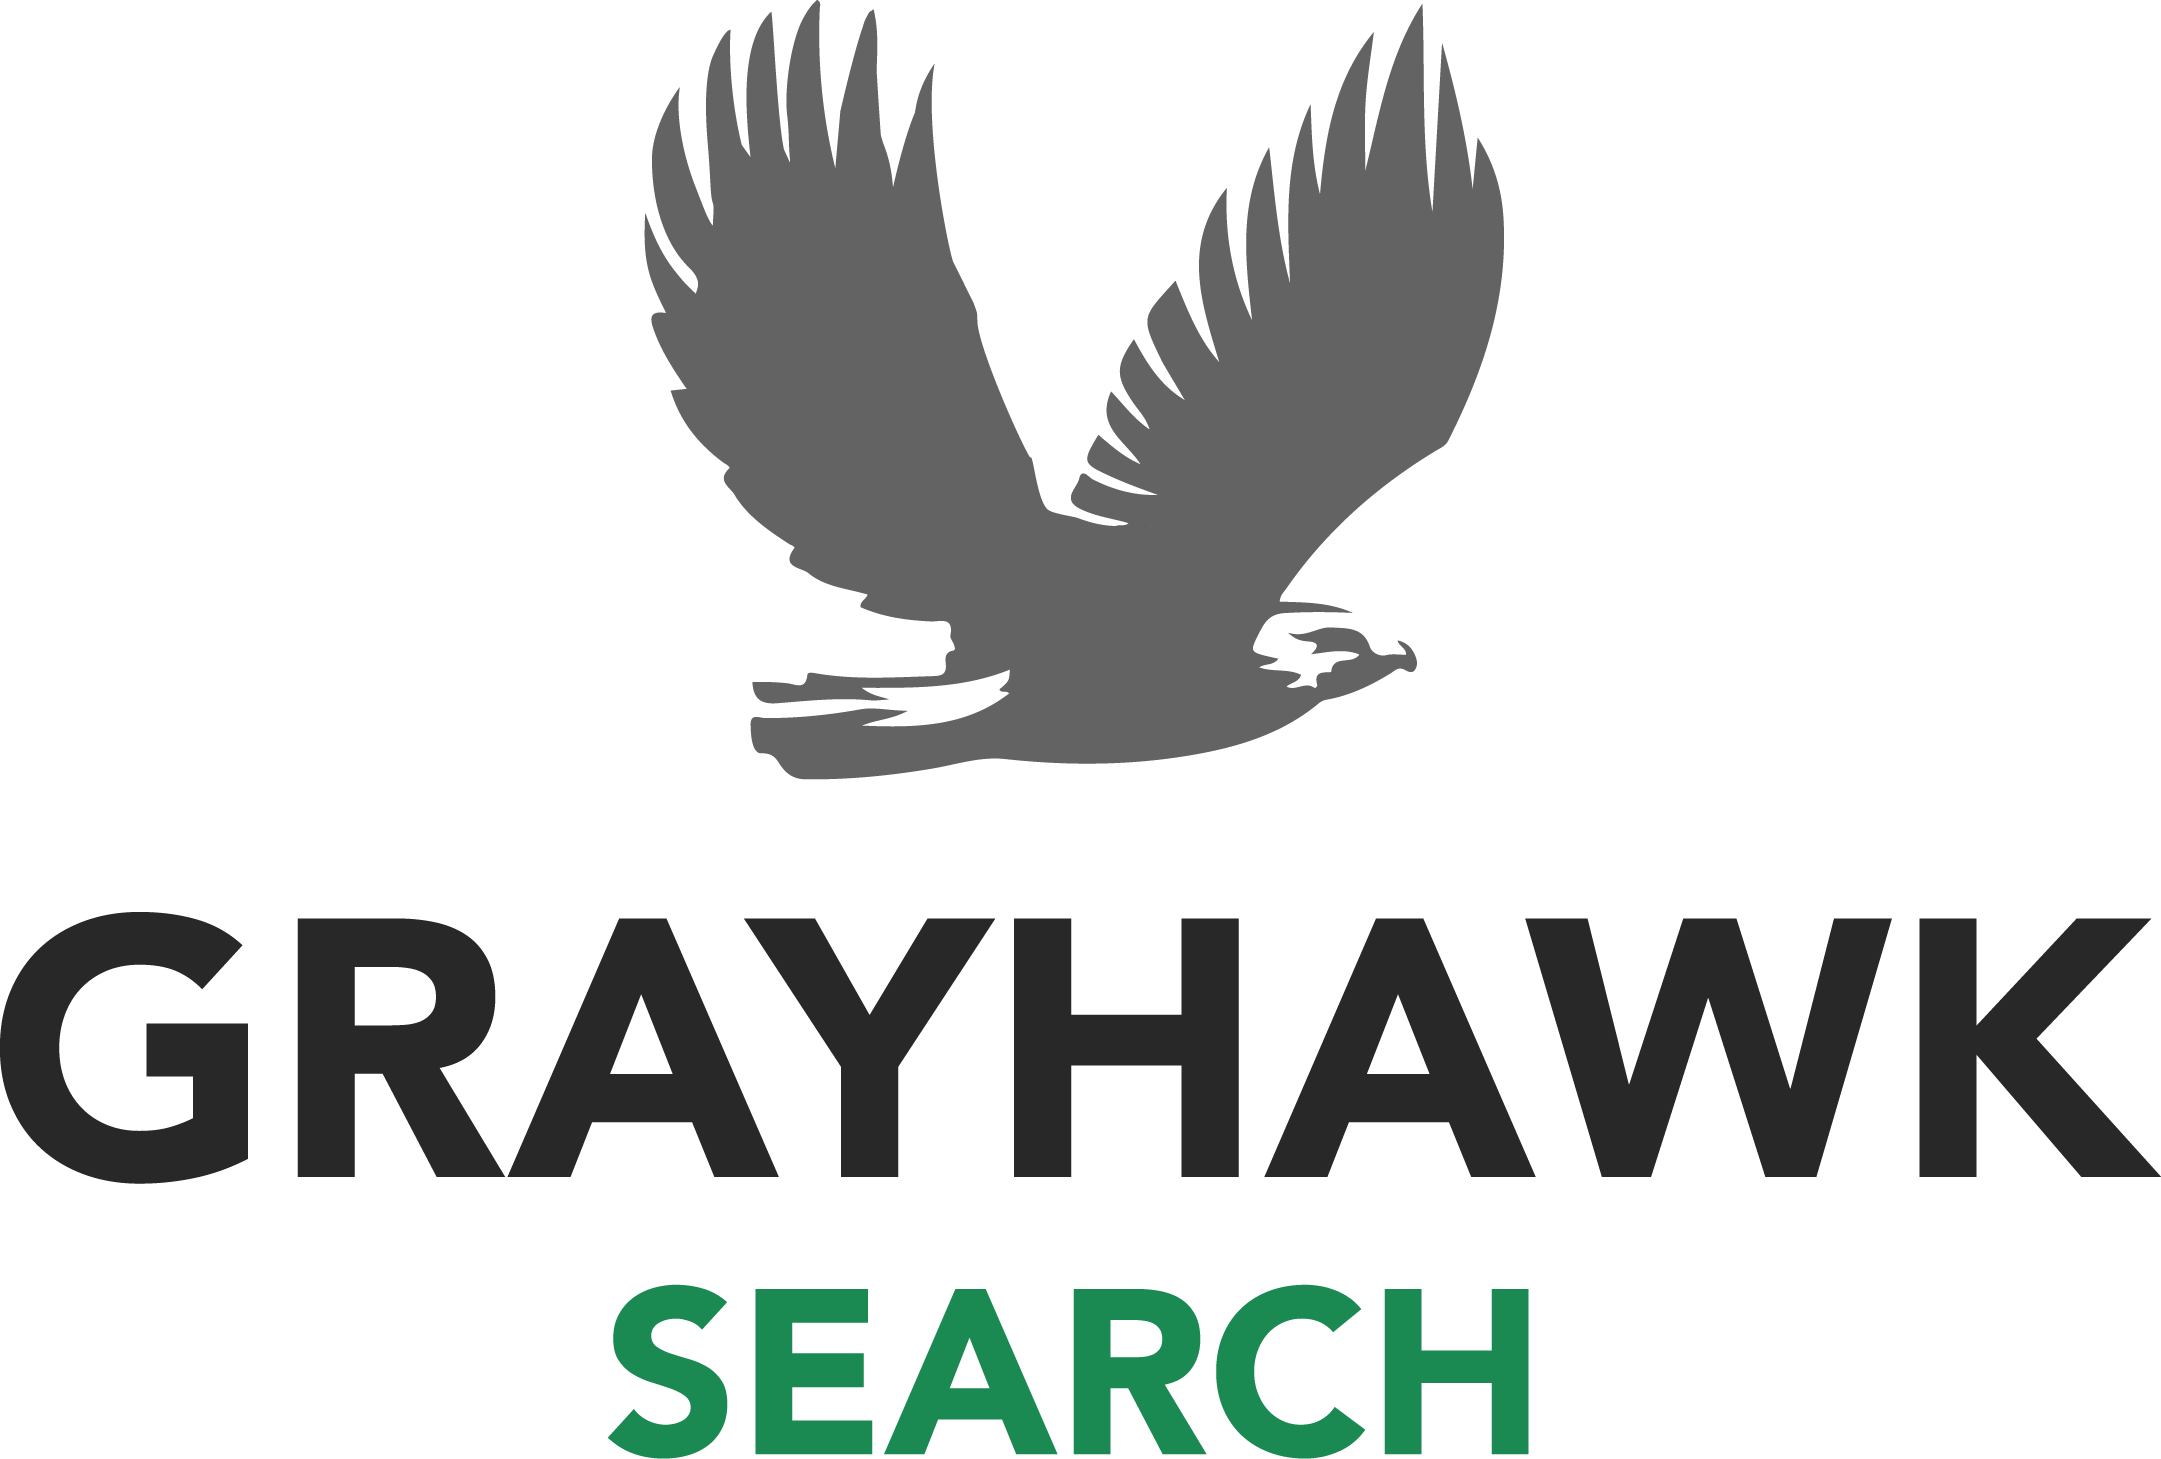 Grayhawk-search-black-green-no-background-logo